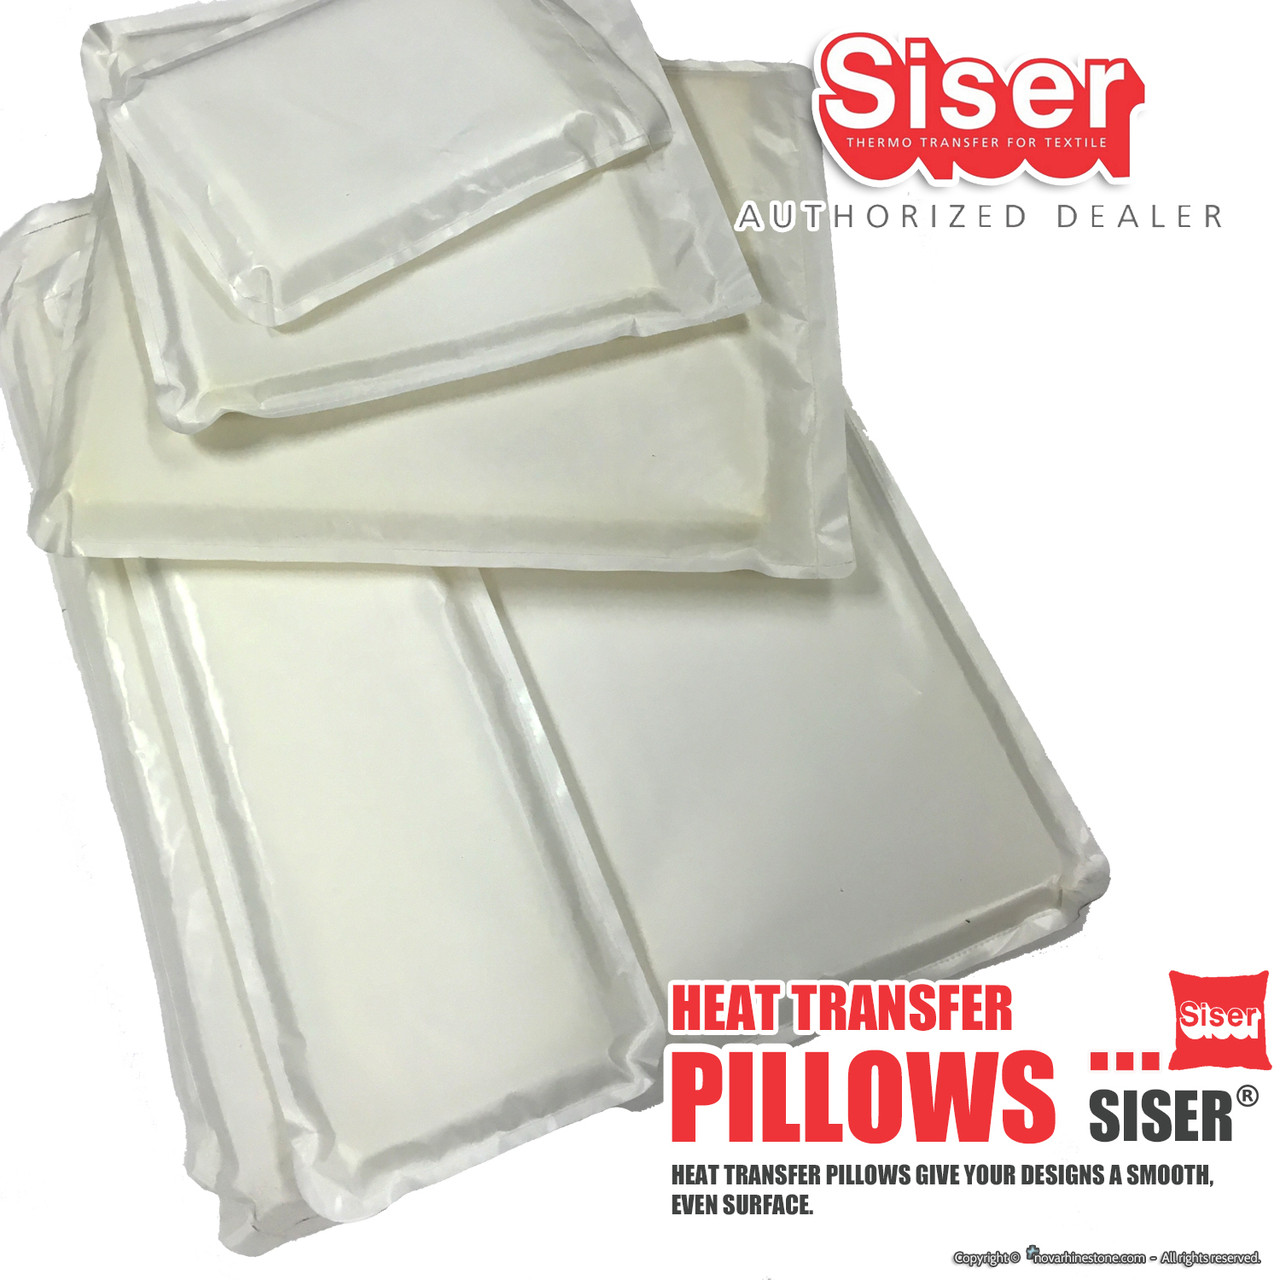 Heat Press Pads, Press Pillows, Heat Resistant, Heat Press High Density Pads /pillows 6x8, 10x12, and 14x14 Set of 3, Press Pad, NEW 